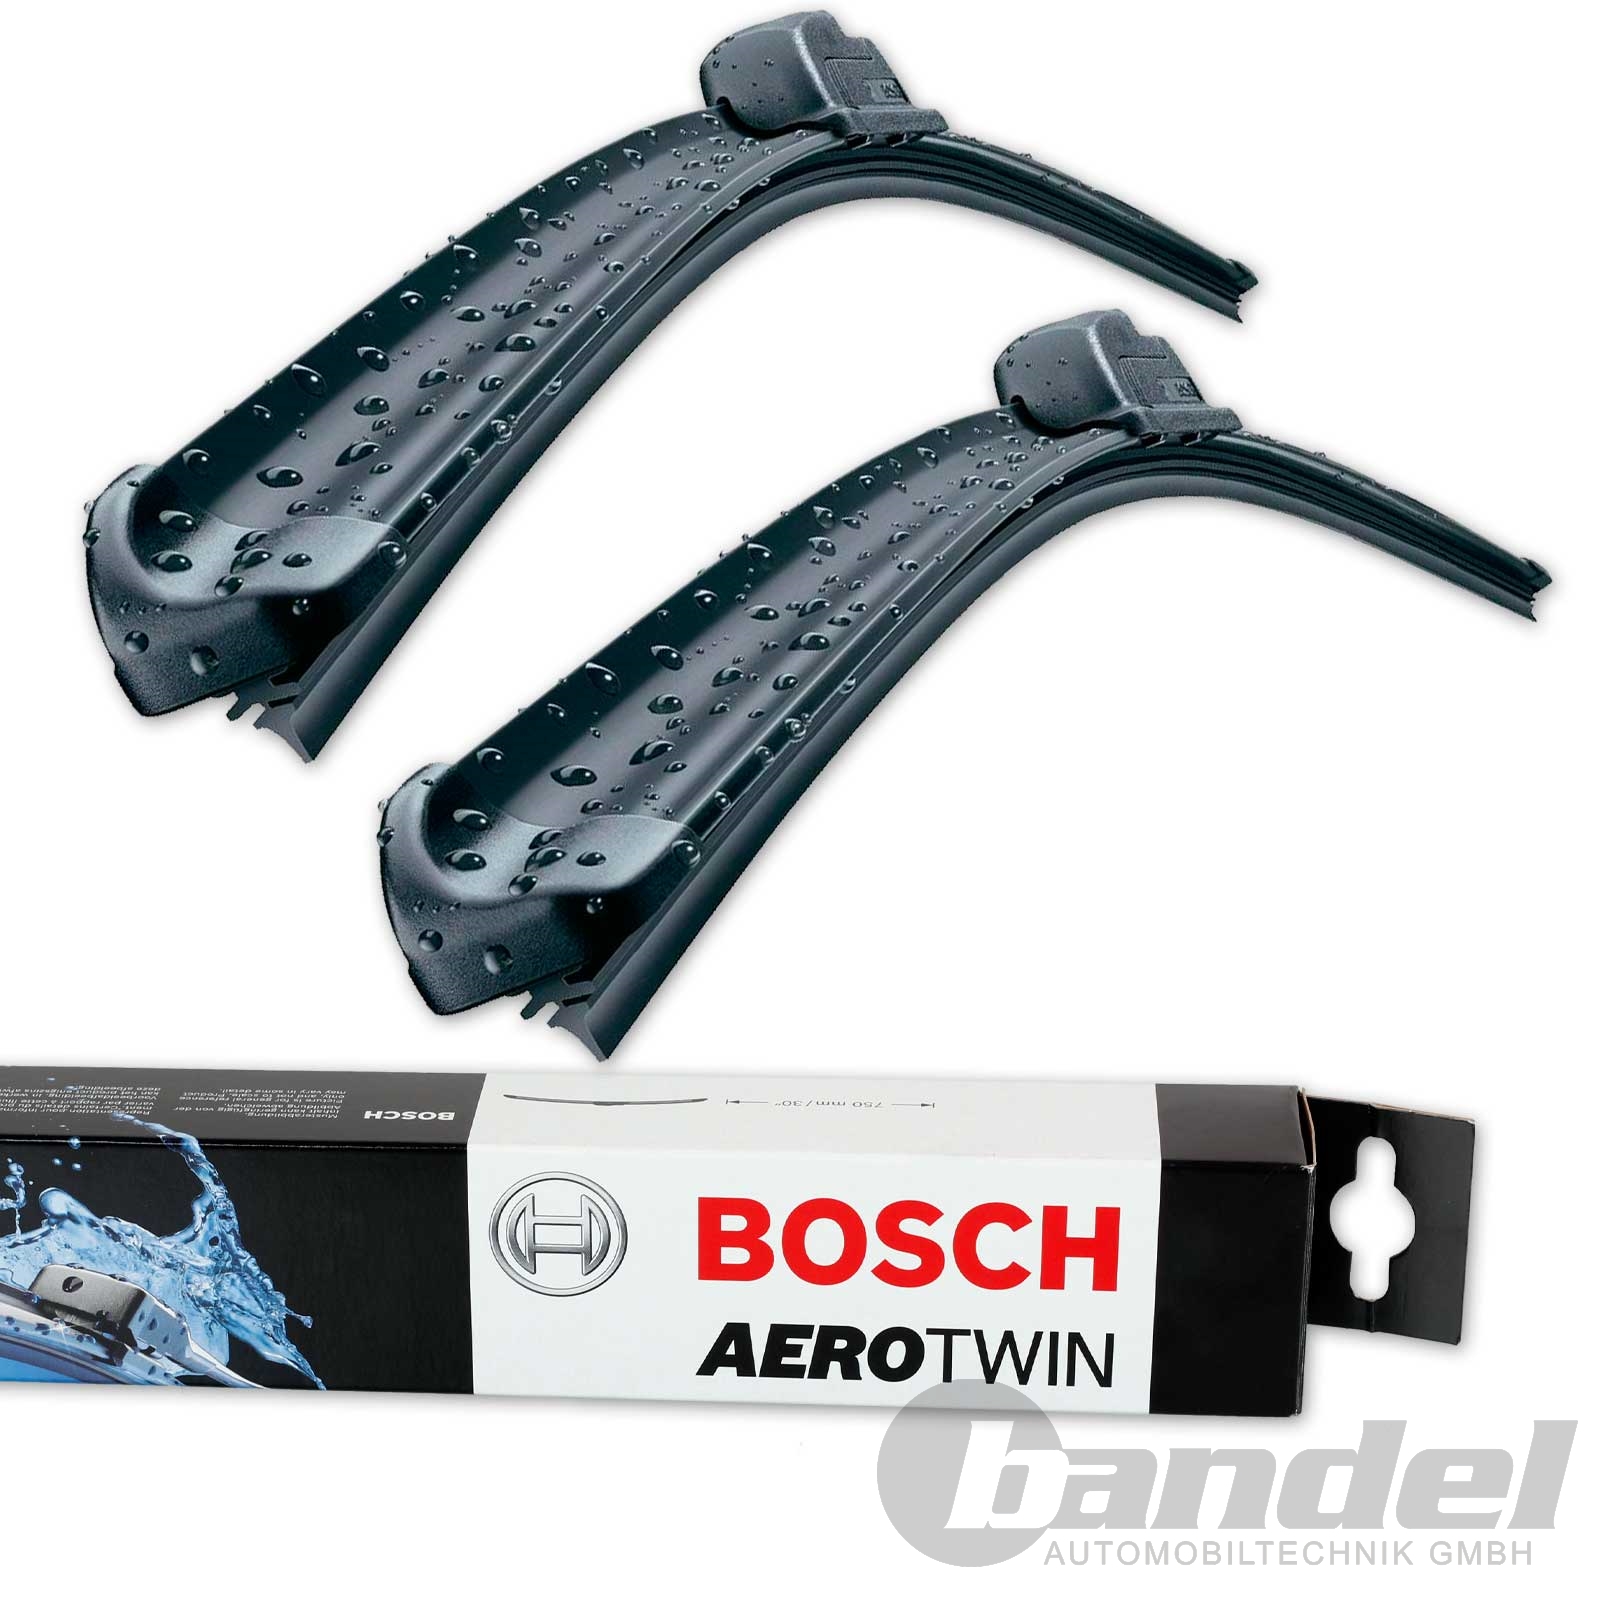 Bosch Aerotwin A955S desde 27,20 €